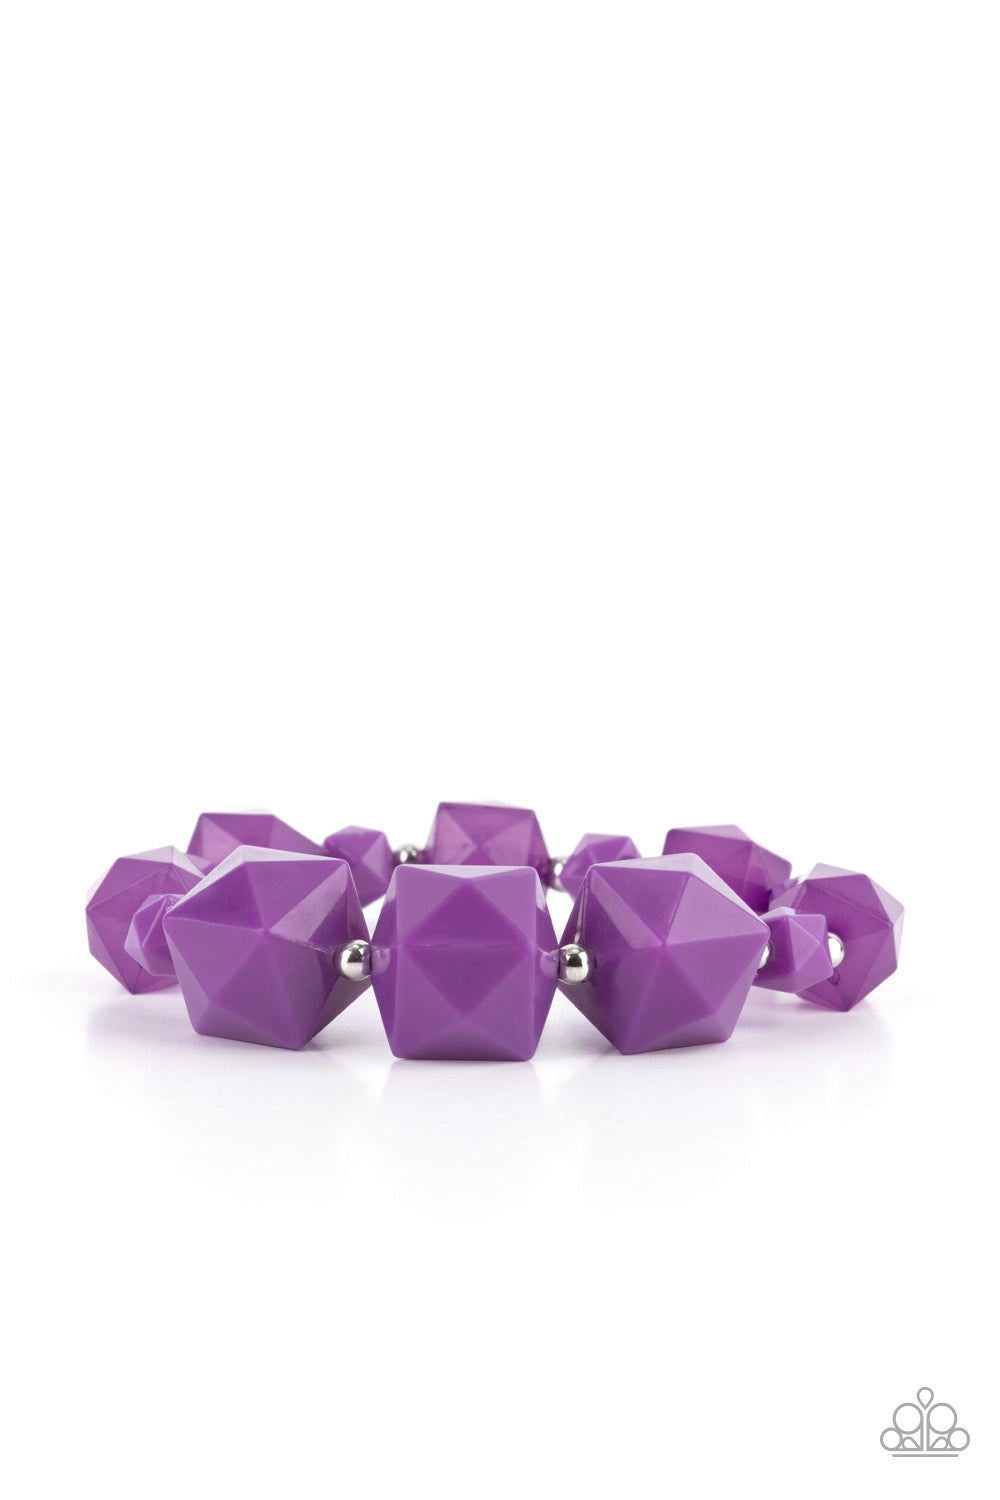 Trendsetting Tourist - Purple Bracelet freeshipping - JewLz4u Gemstone Gallery